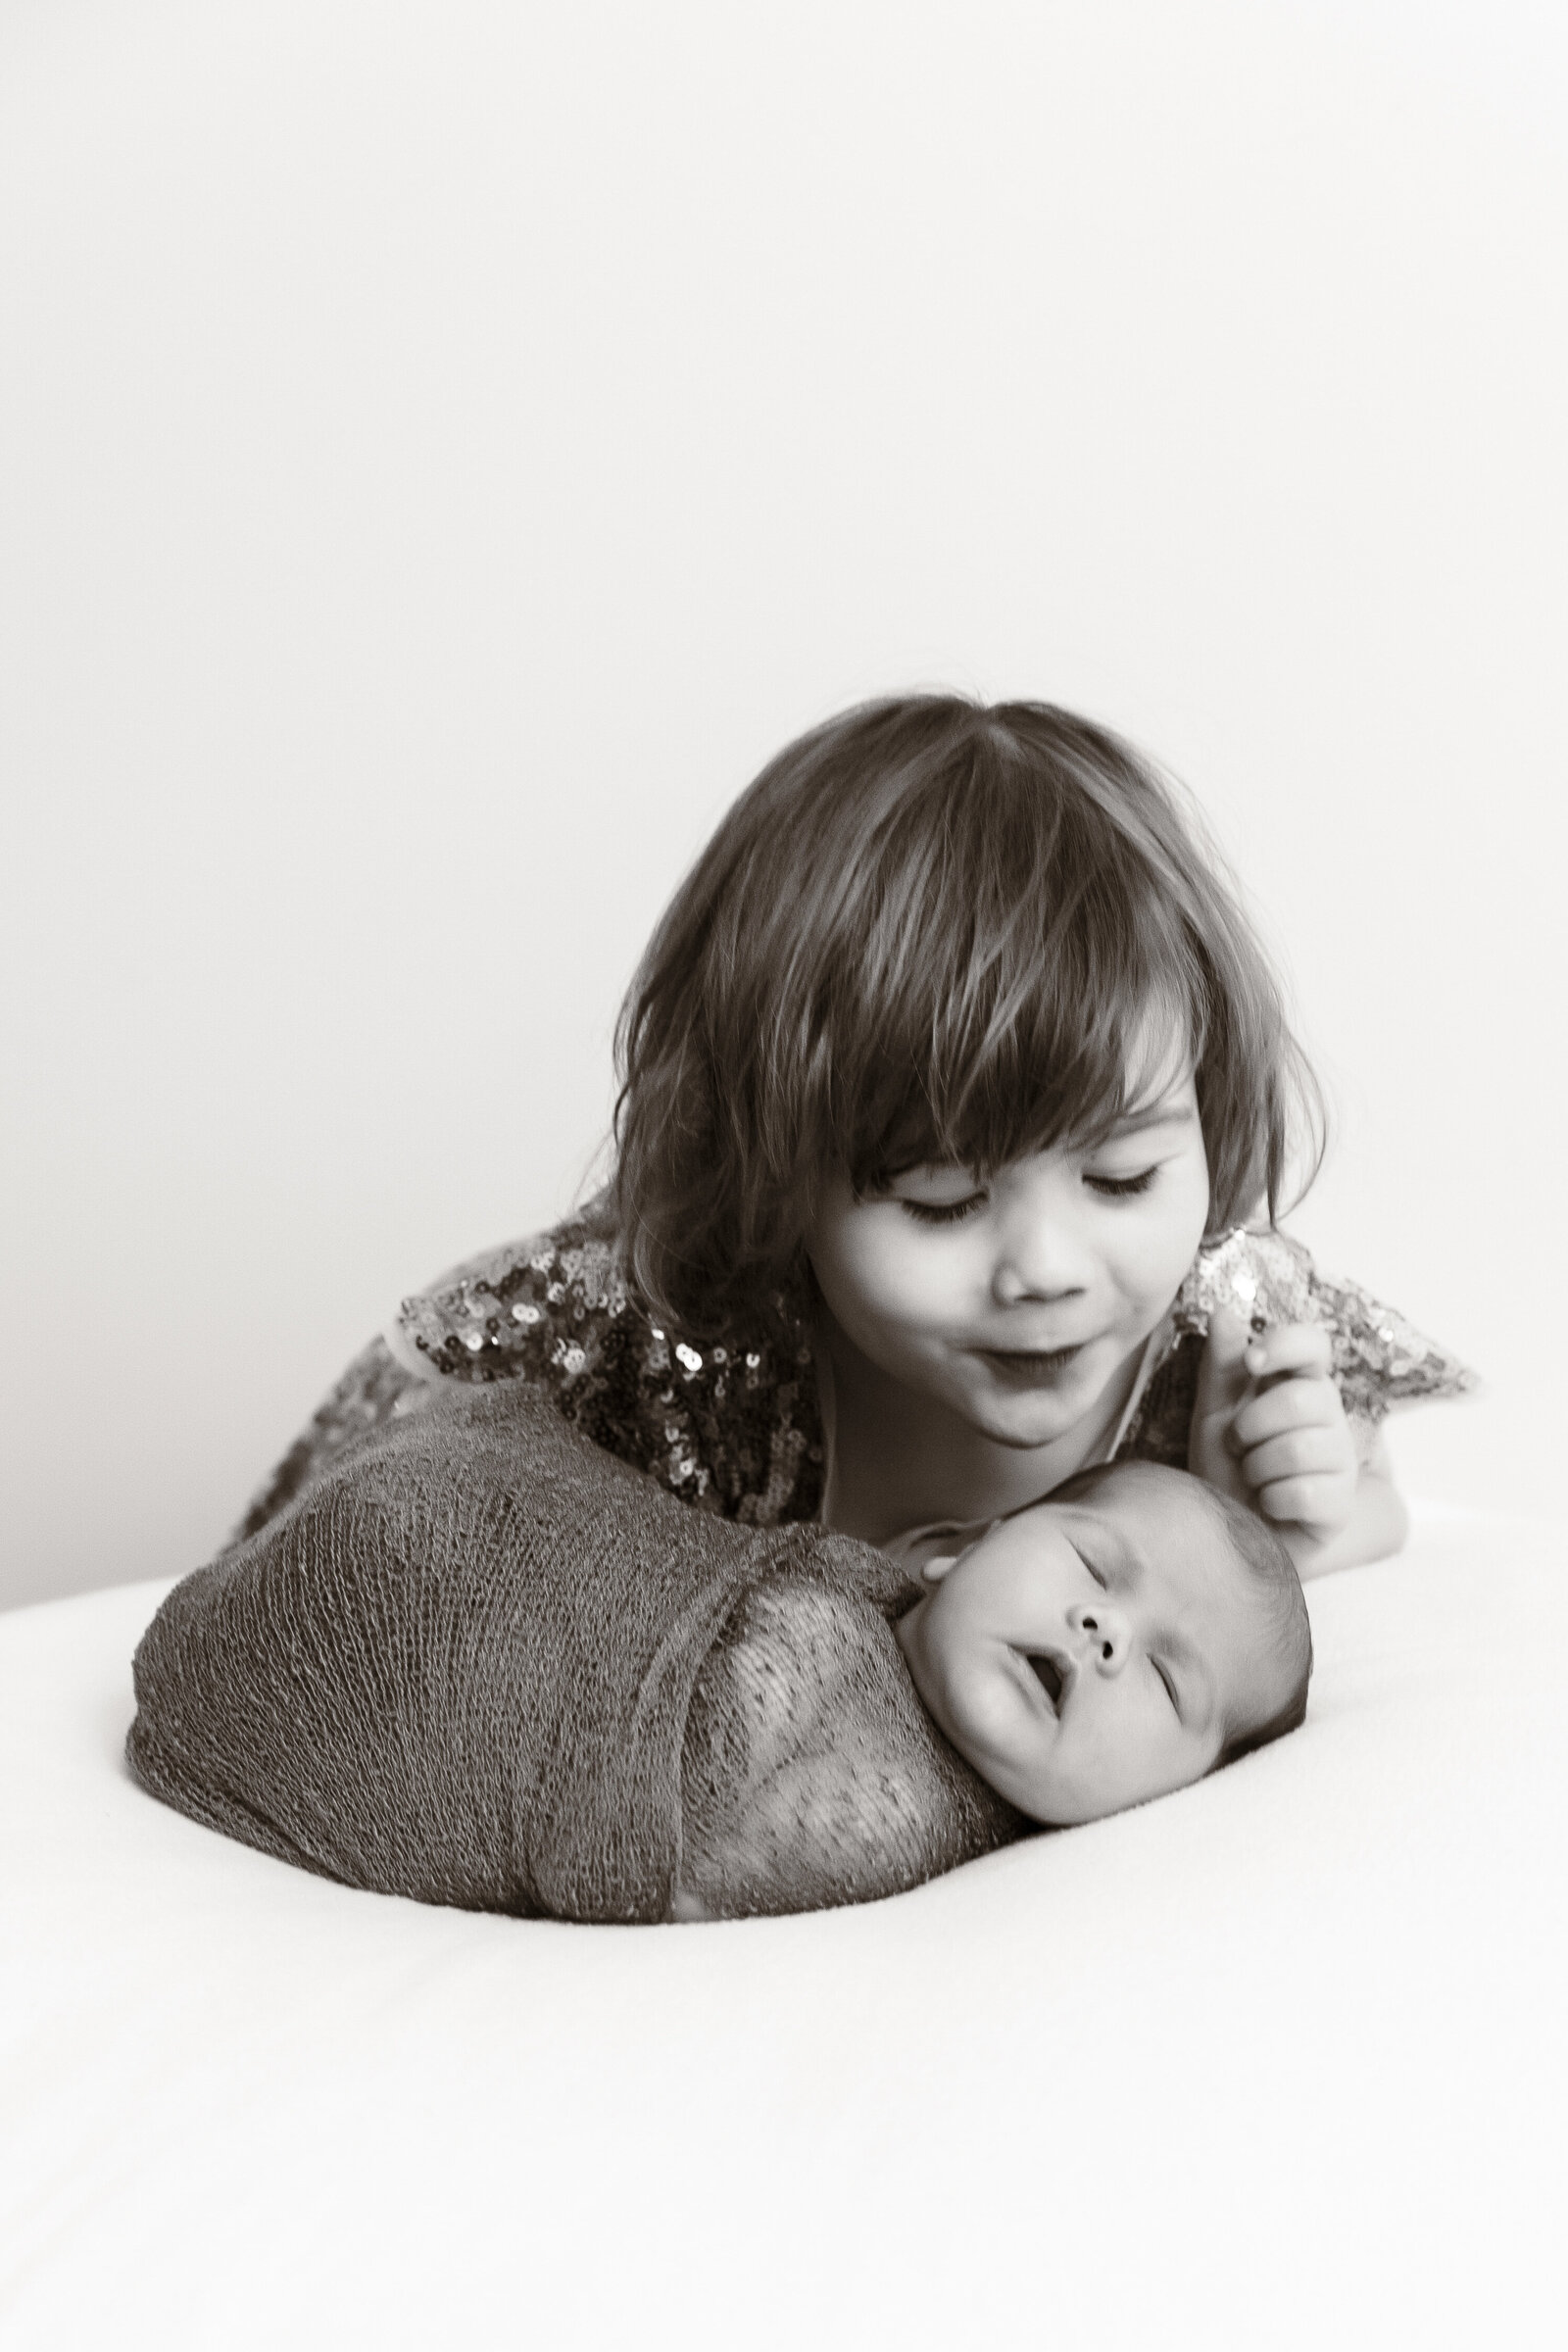 Blury Photography - BRISBANE NEWBORN PHOTOGRAPHY - newborn photographer - brisbane - baby - photography - bump to baby 2